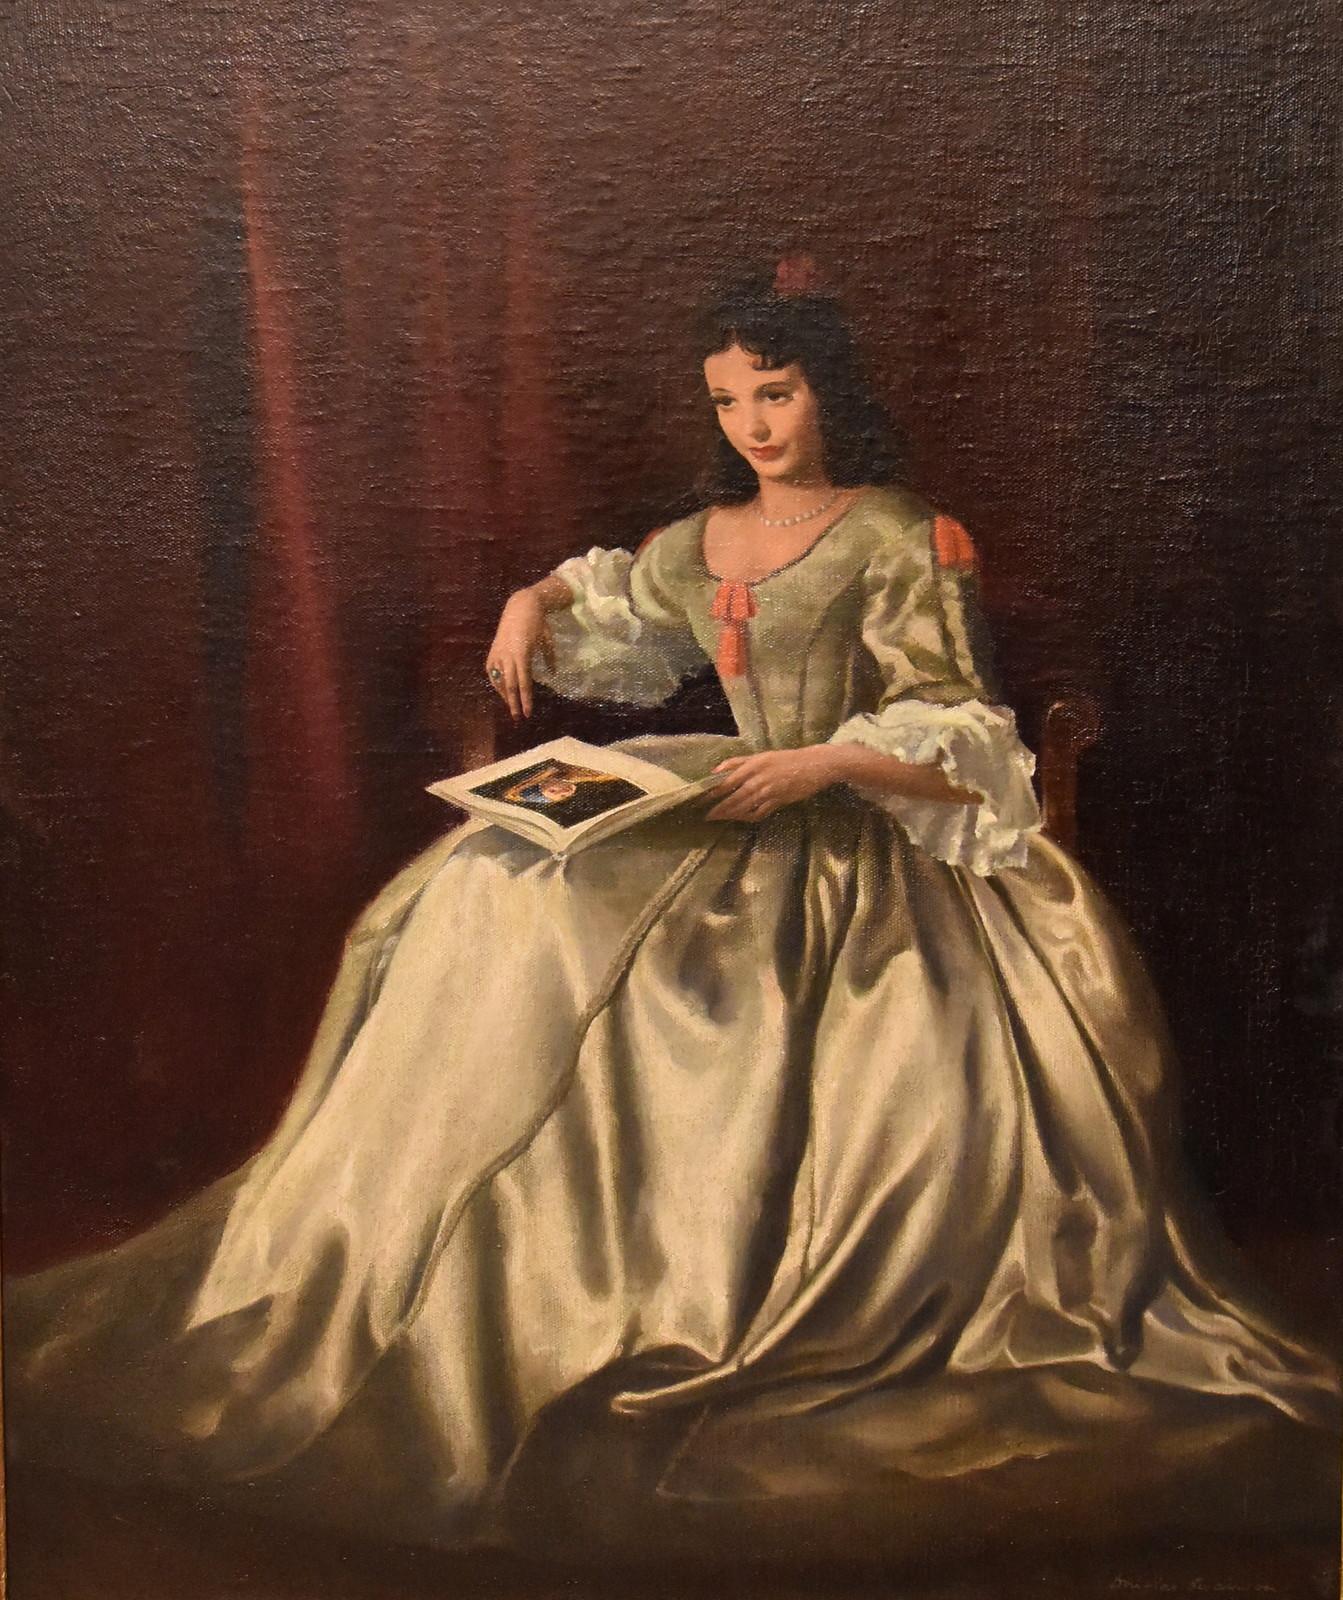 Douglas Swanson Portrait Painting - Oil Painting by Douglas Swainson “Celia in Period Dress”